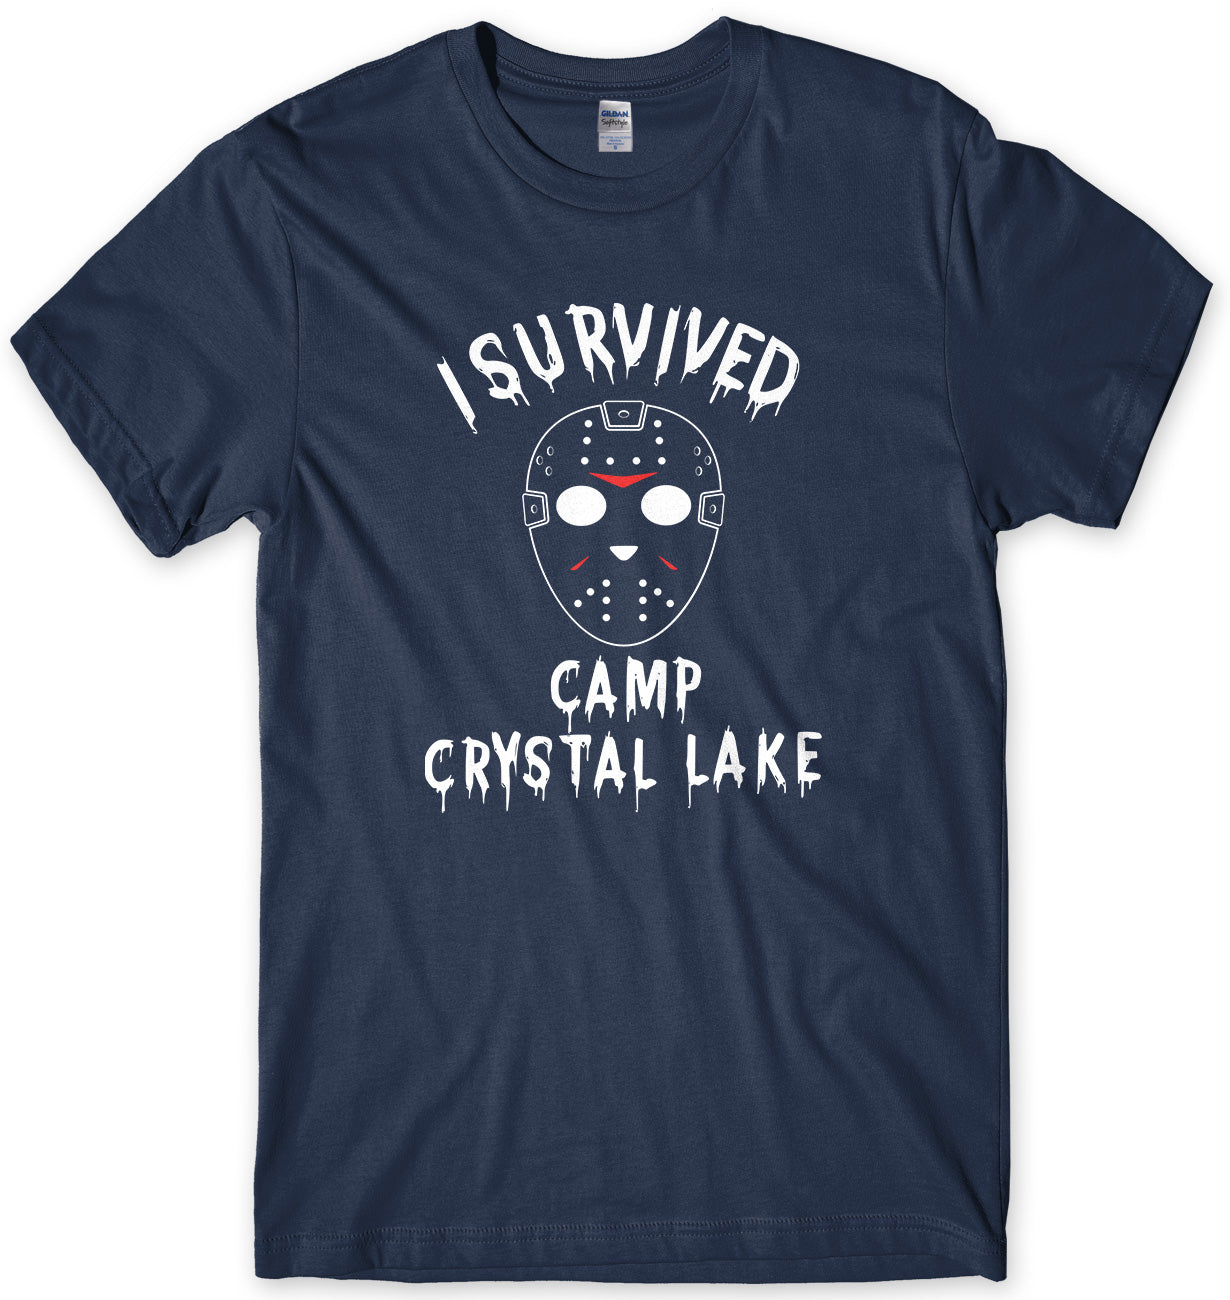 I SURVIVED CAMP CRYSTAL LAKE MENS UNISEX T-SHIRT